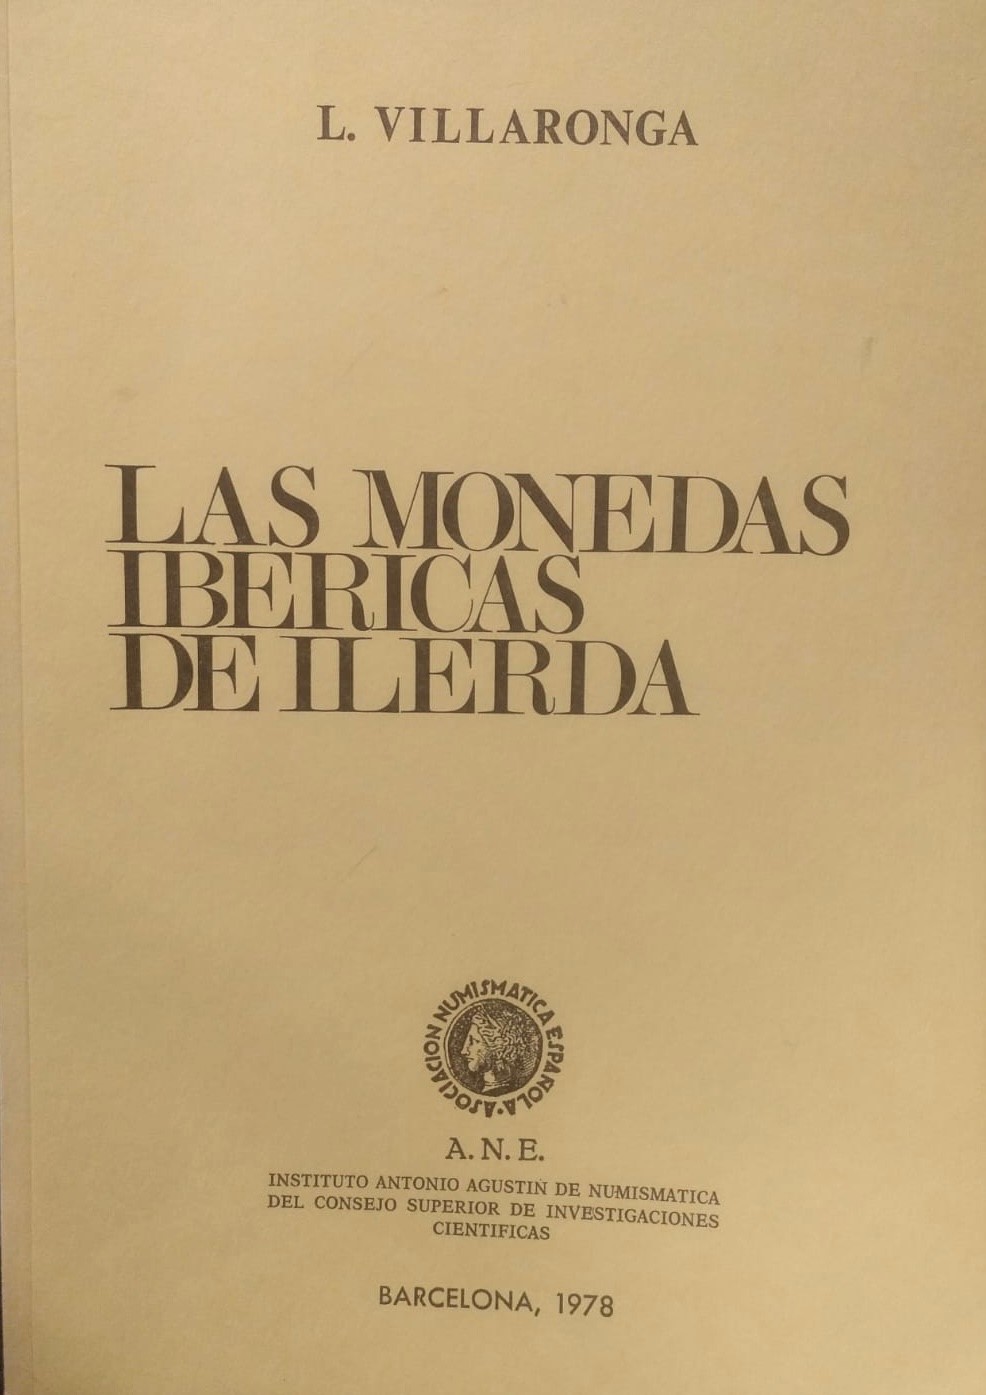 Las monedas Ibéricas de Illerda.  L. Villaronga. A. N. E.